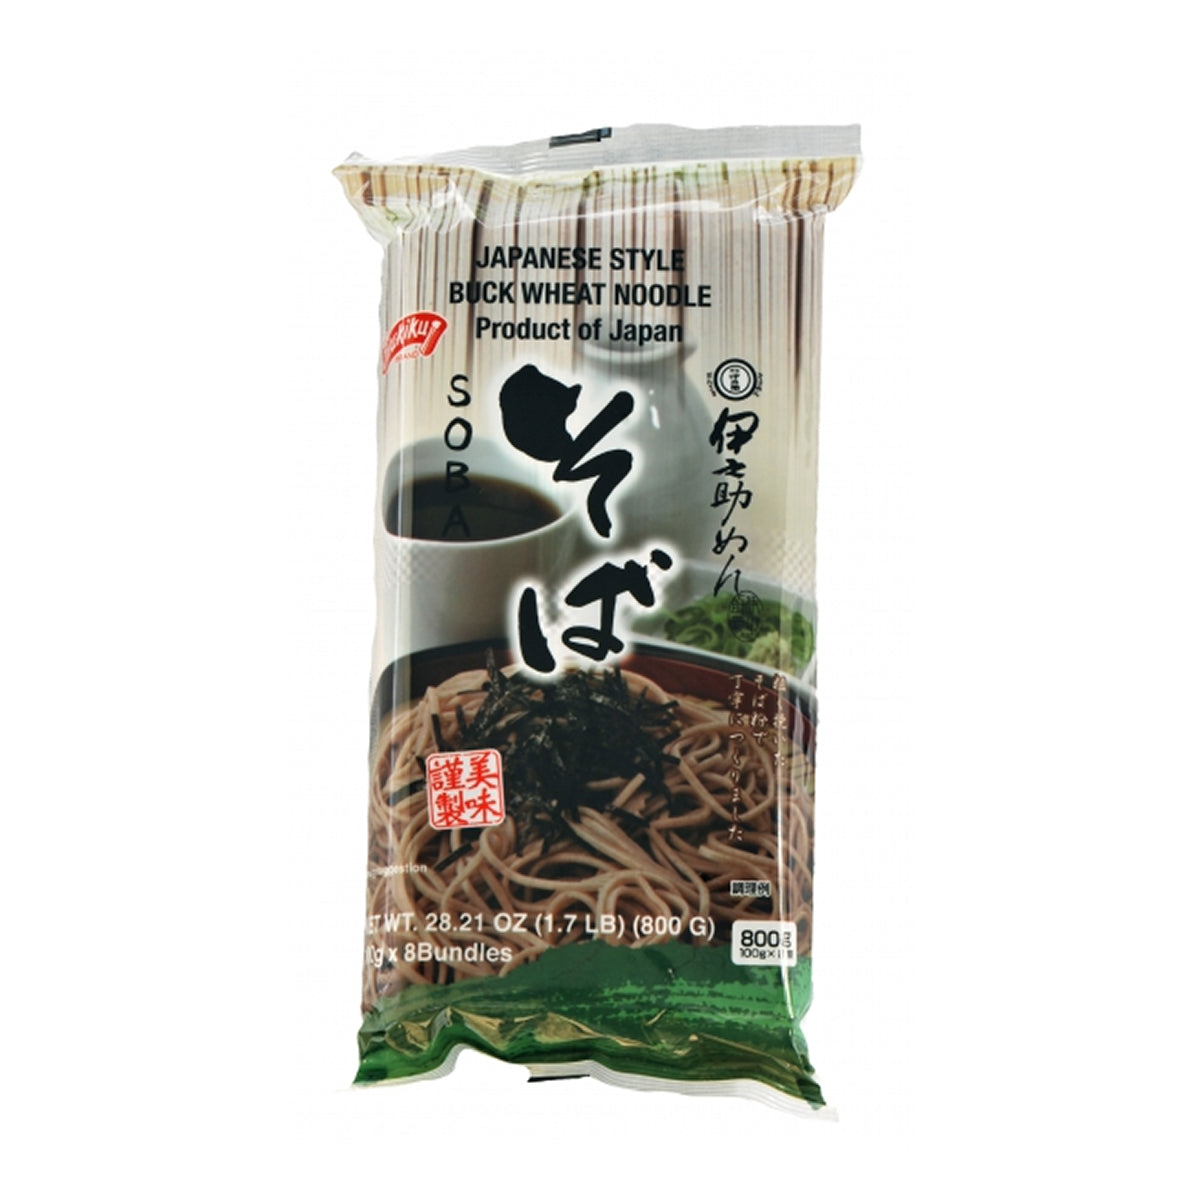 shirakiku japanese soba buckwheat noodles - 28.21oz